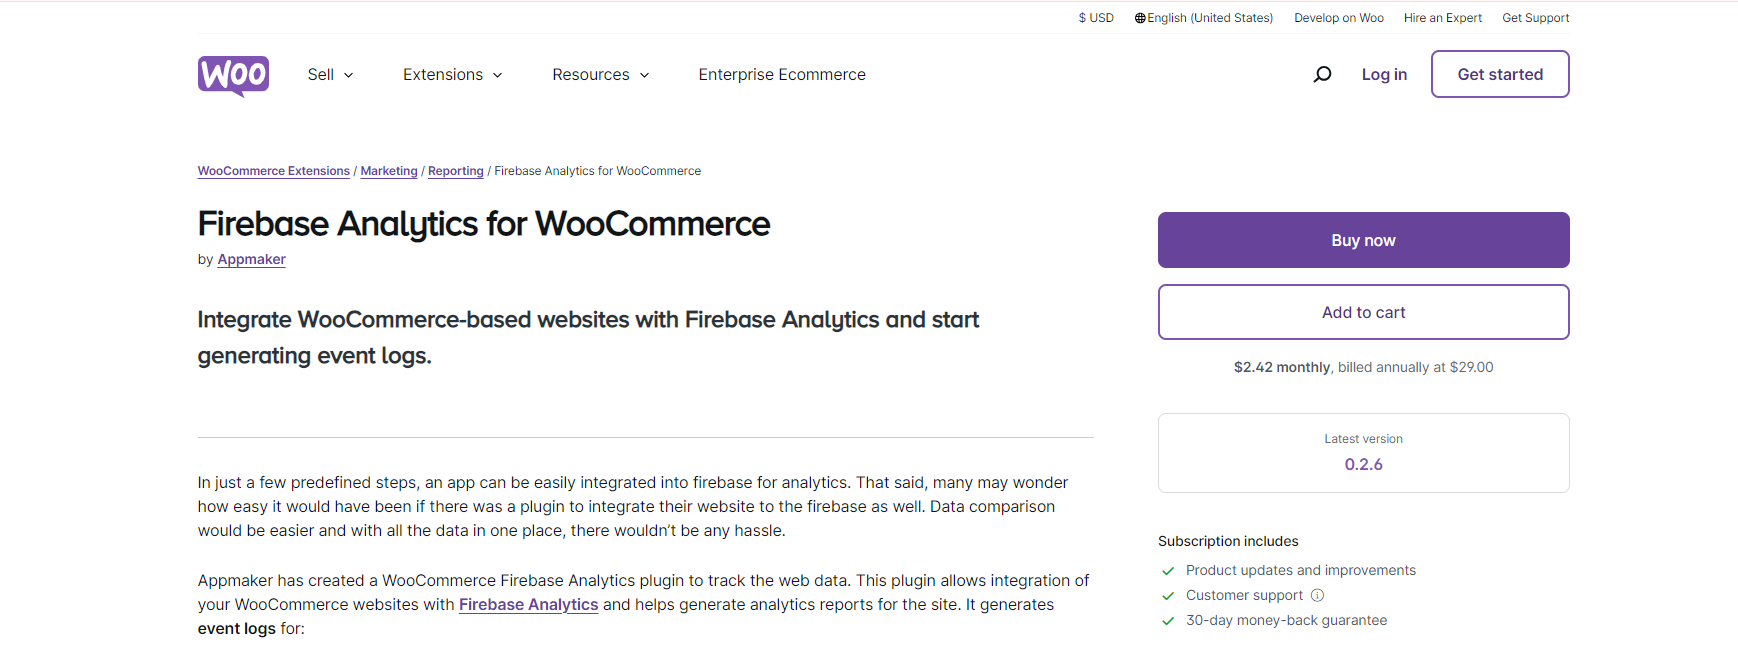 Firebase Analytics for WooCommerce